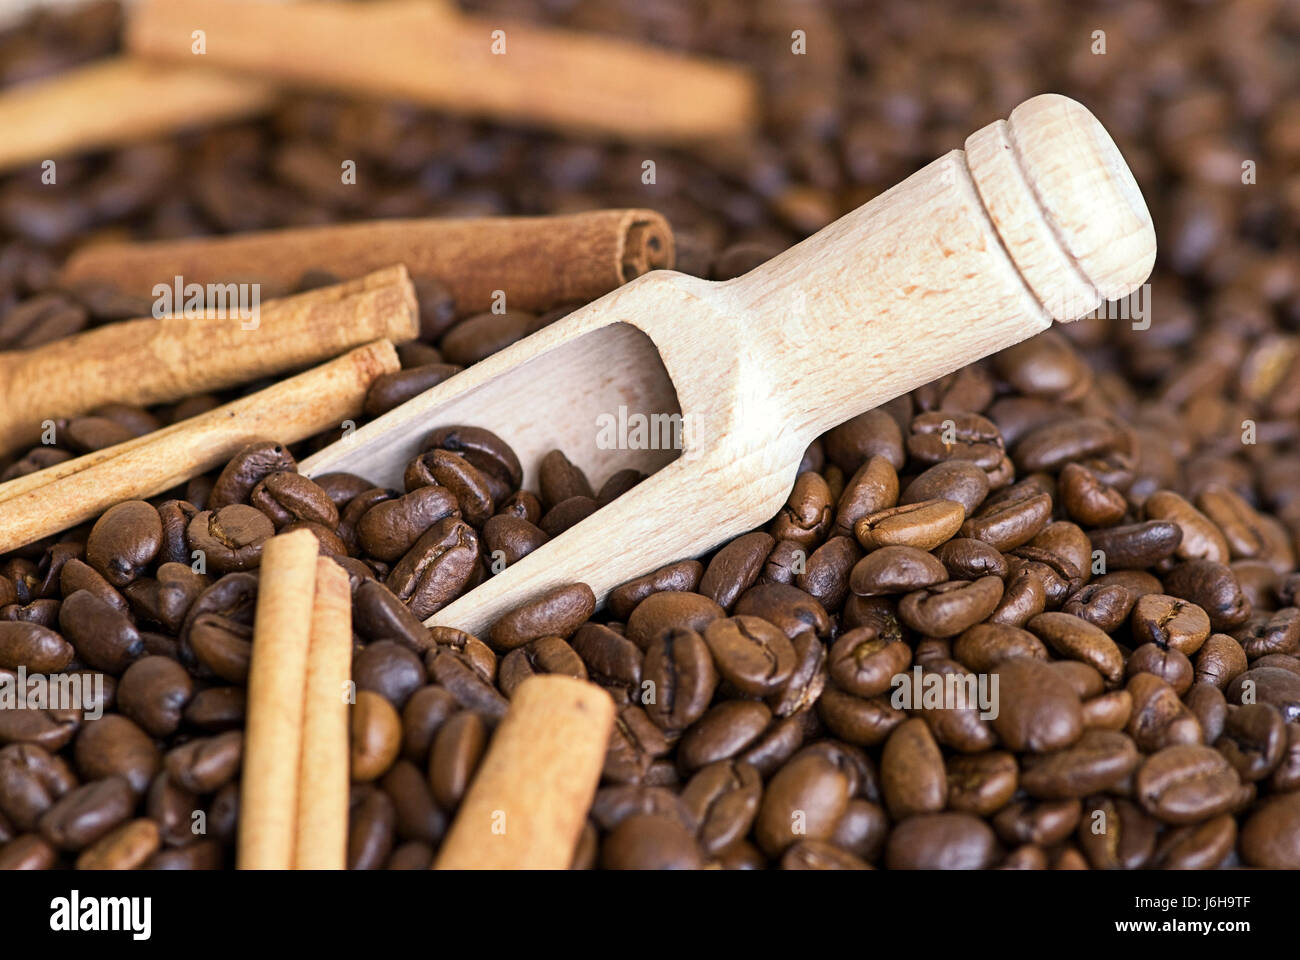 jute semiluxury food oxidized coffee coffee bean coffee beans cinamon cinnamon Stock Photo